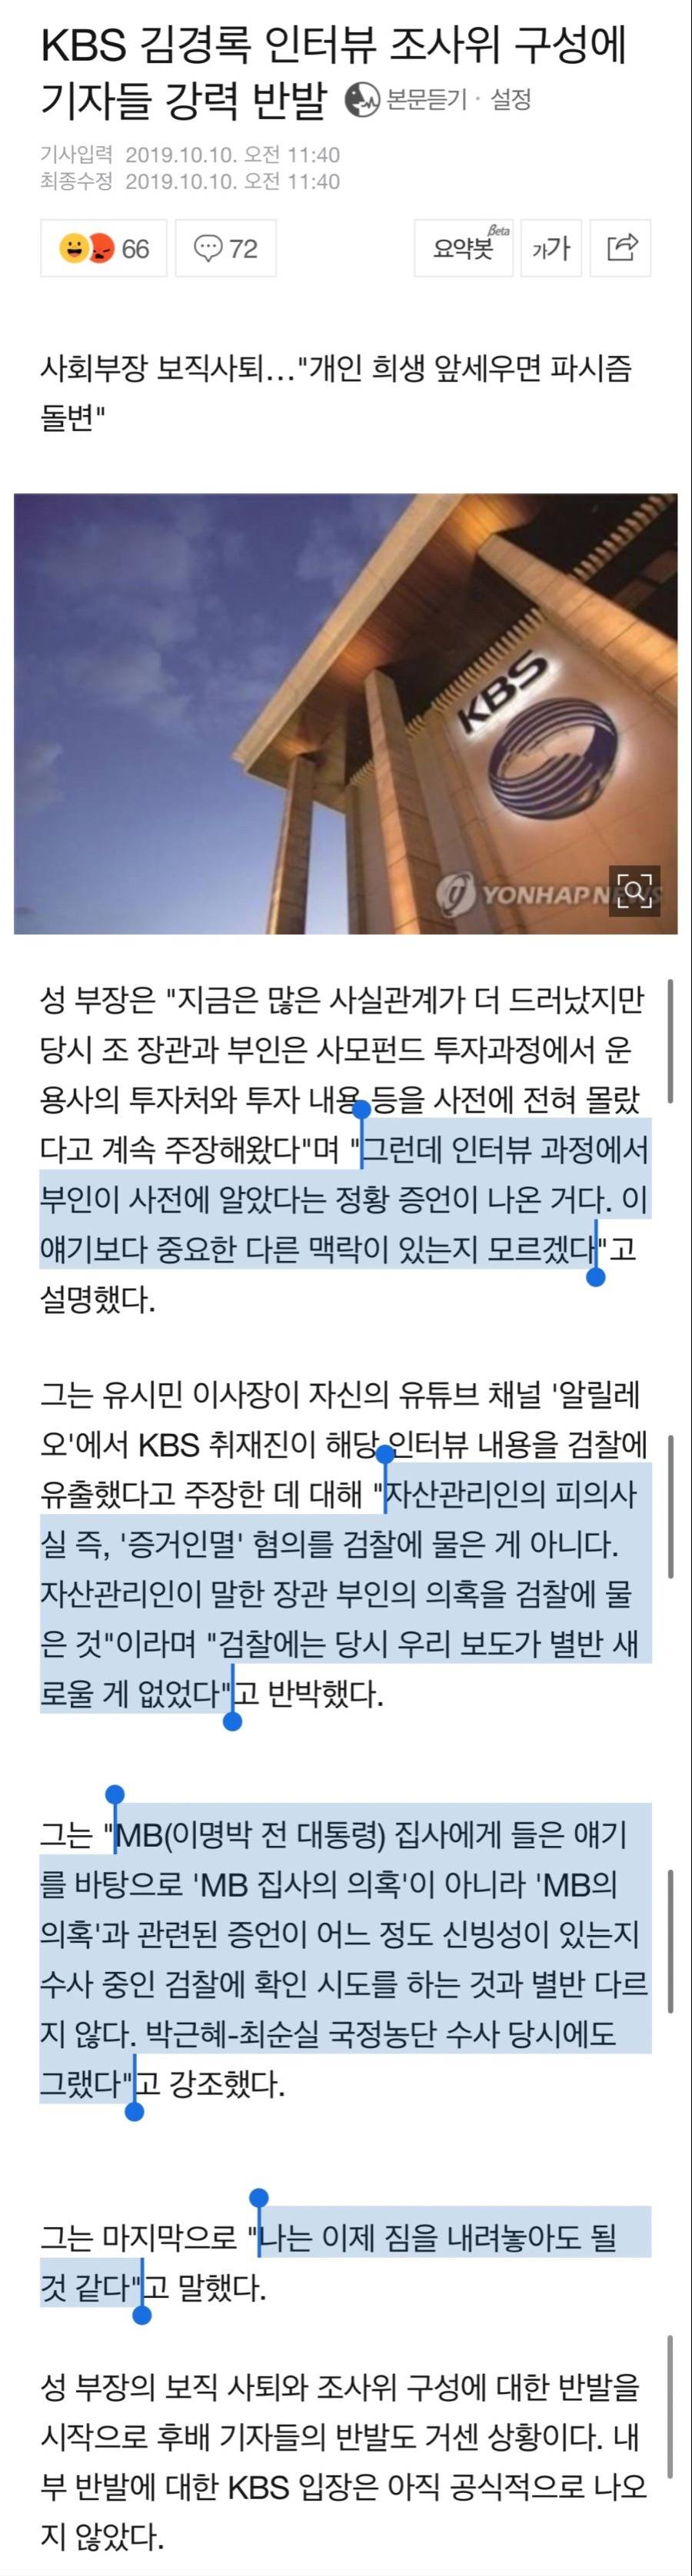 KBS 김경록 인터뷰 조사위 구성. 기자들 강력반발+ 사회부장 보직 사퇴 .JPG | 인스티즈